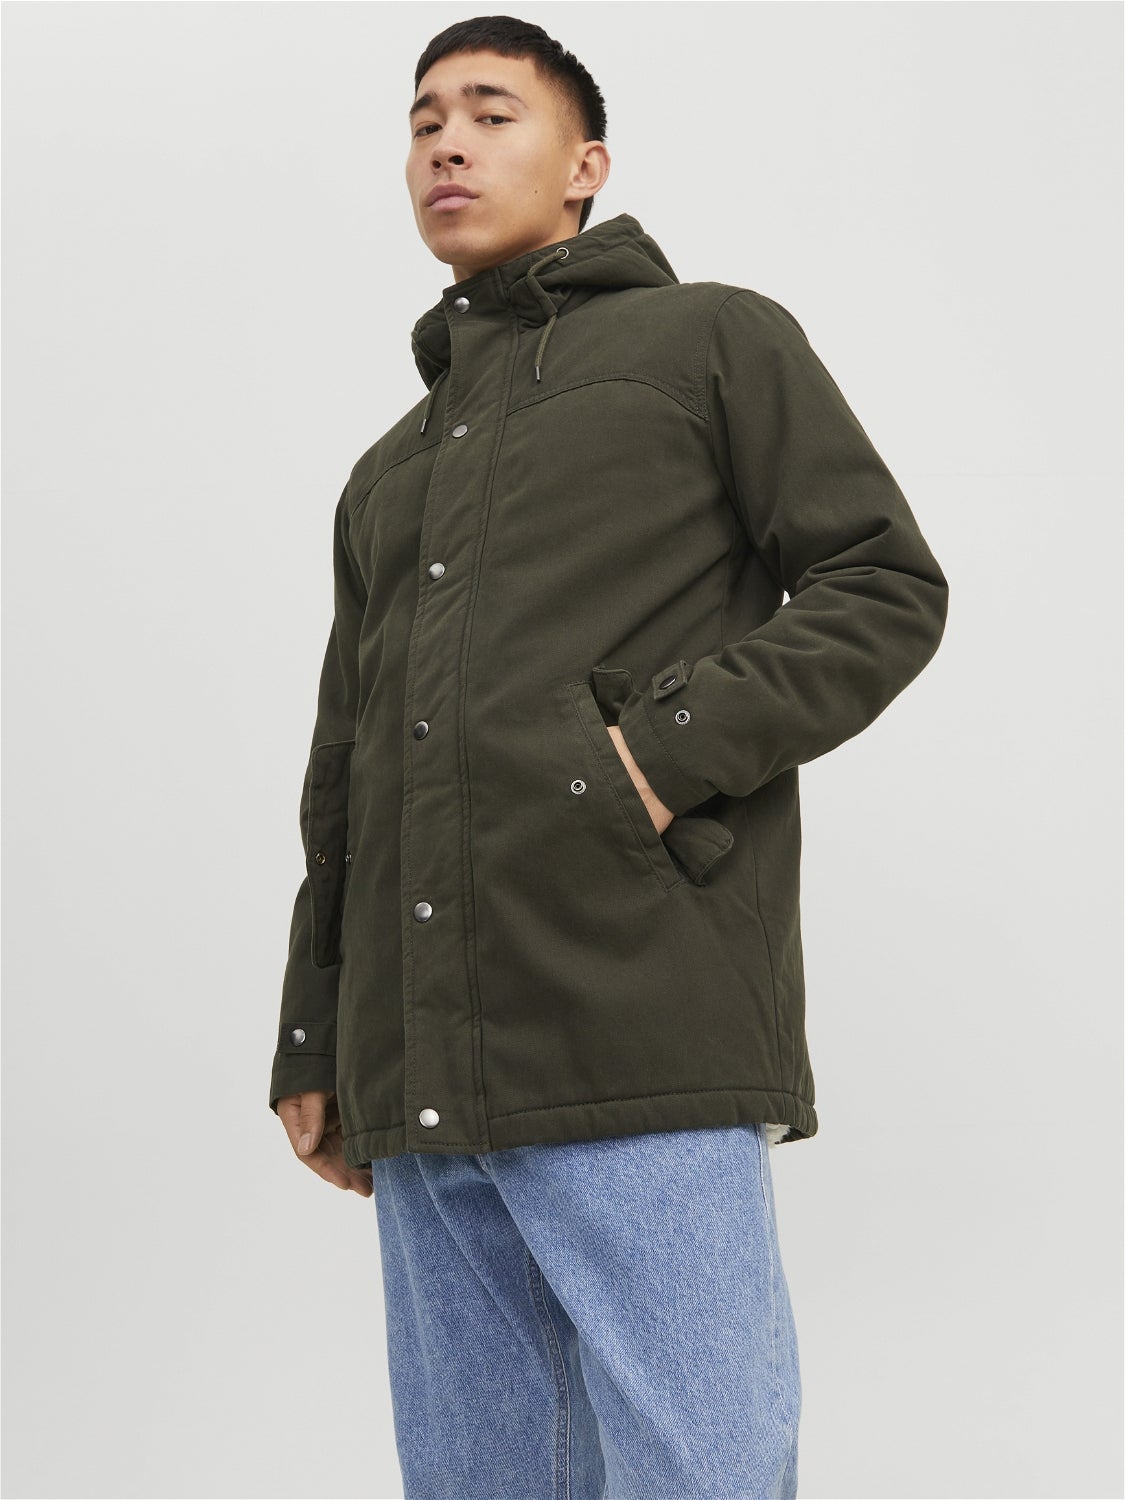 discount 63% Green M Jack & Jones waterproof jacket MEN FASHION Jackets Print 